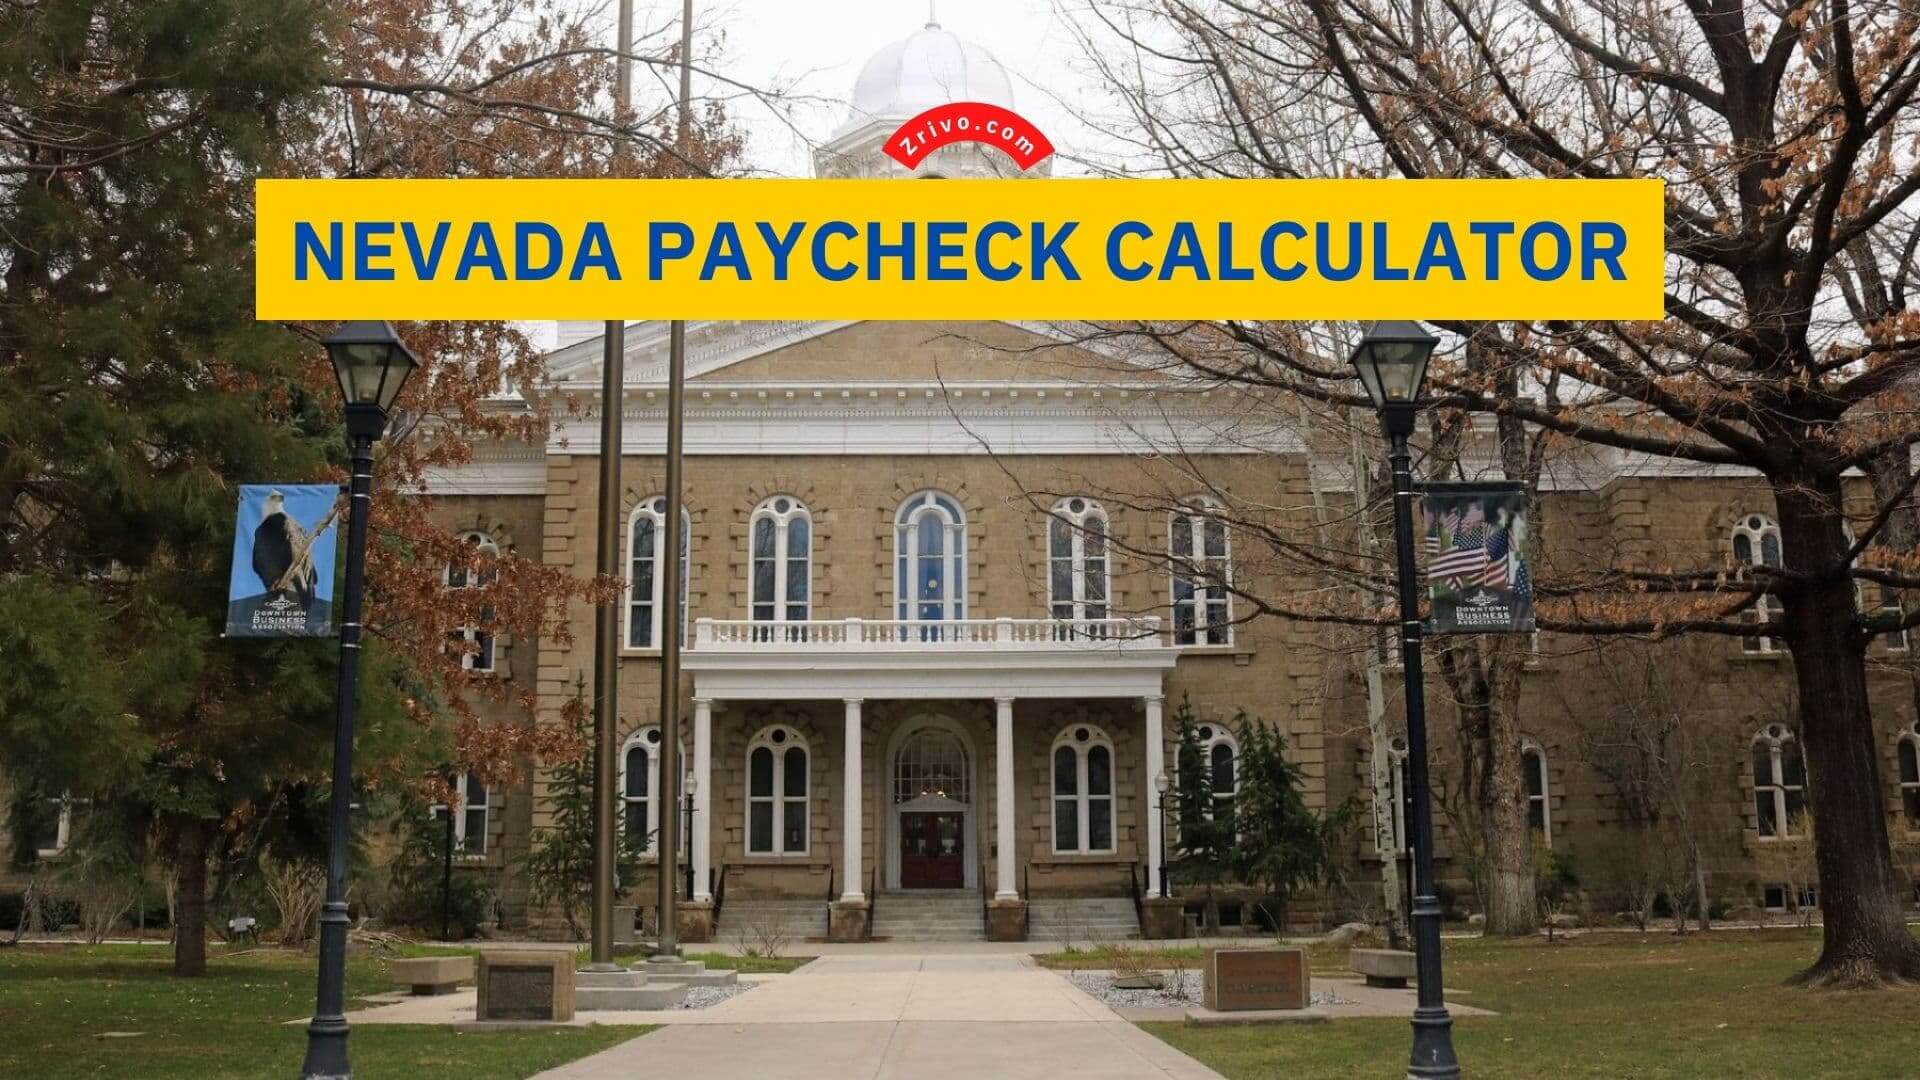 Nevada-Paycheck-Calculator-Zrivo-Cover-1